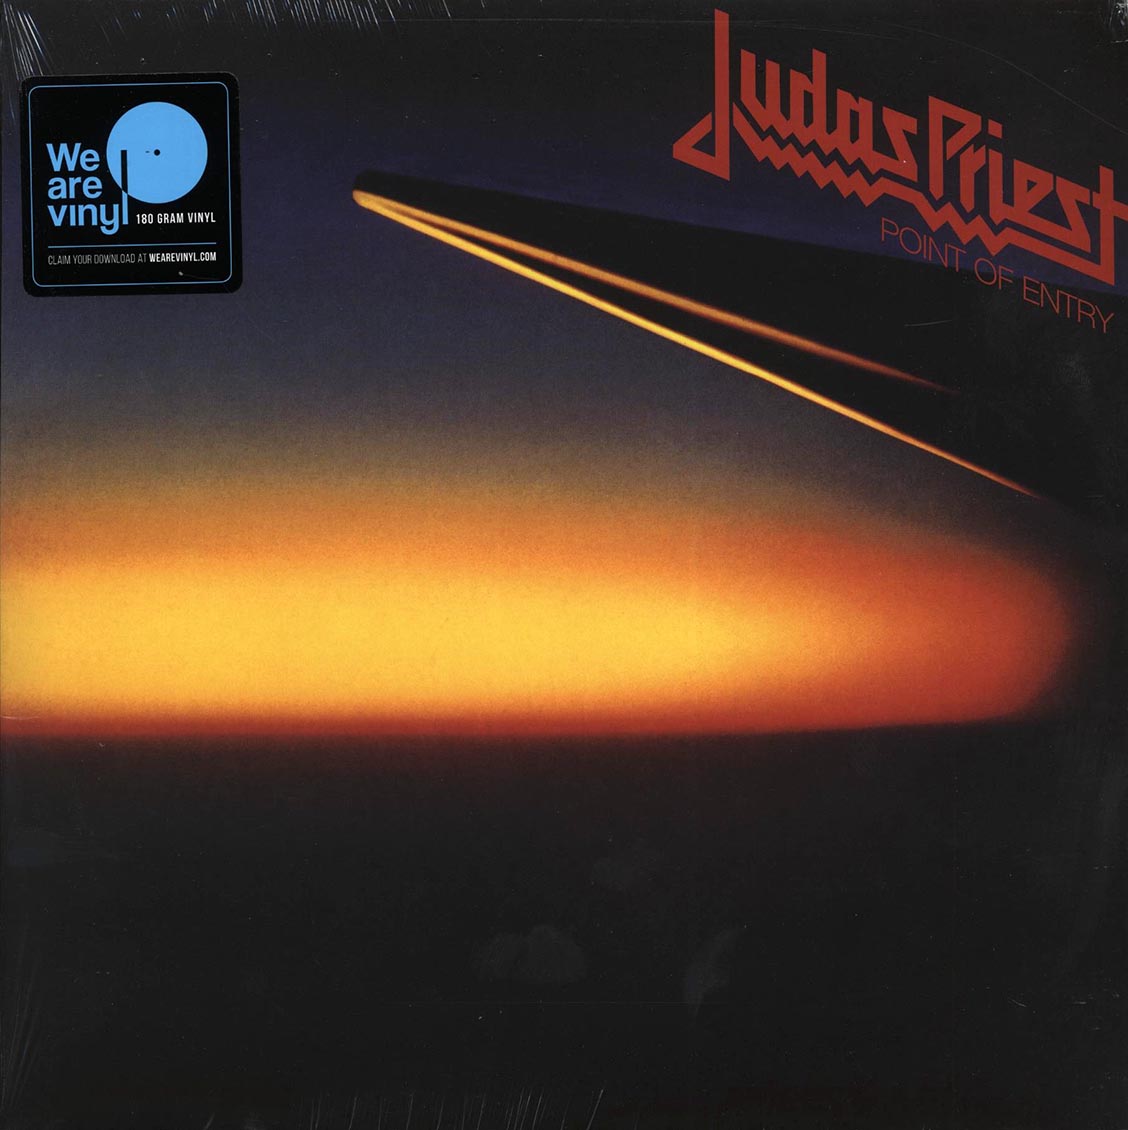 Judas Priest - Point Of Entry (incl. mp3) (180g) - Vinyl LP